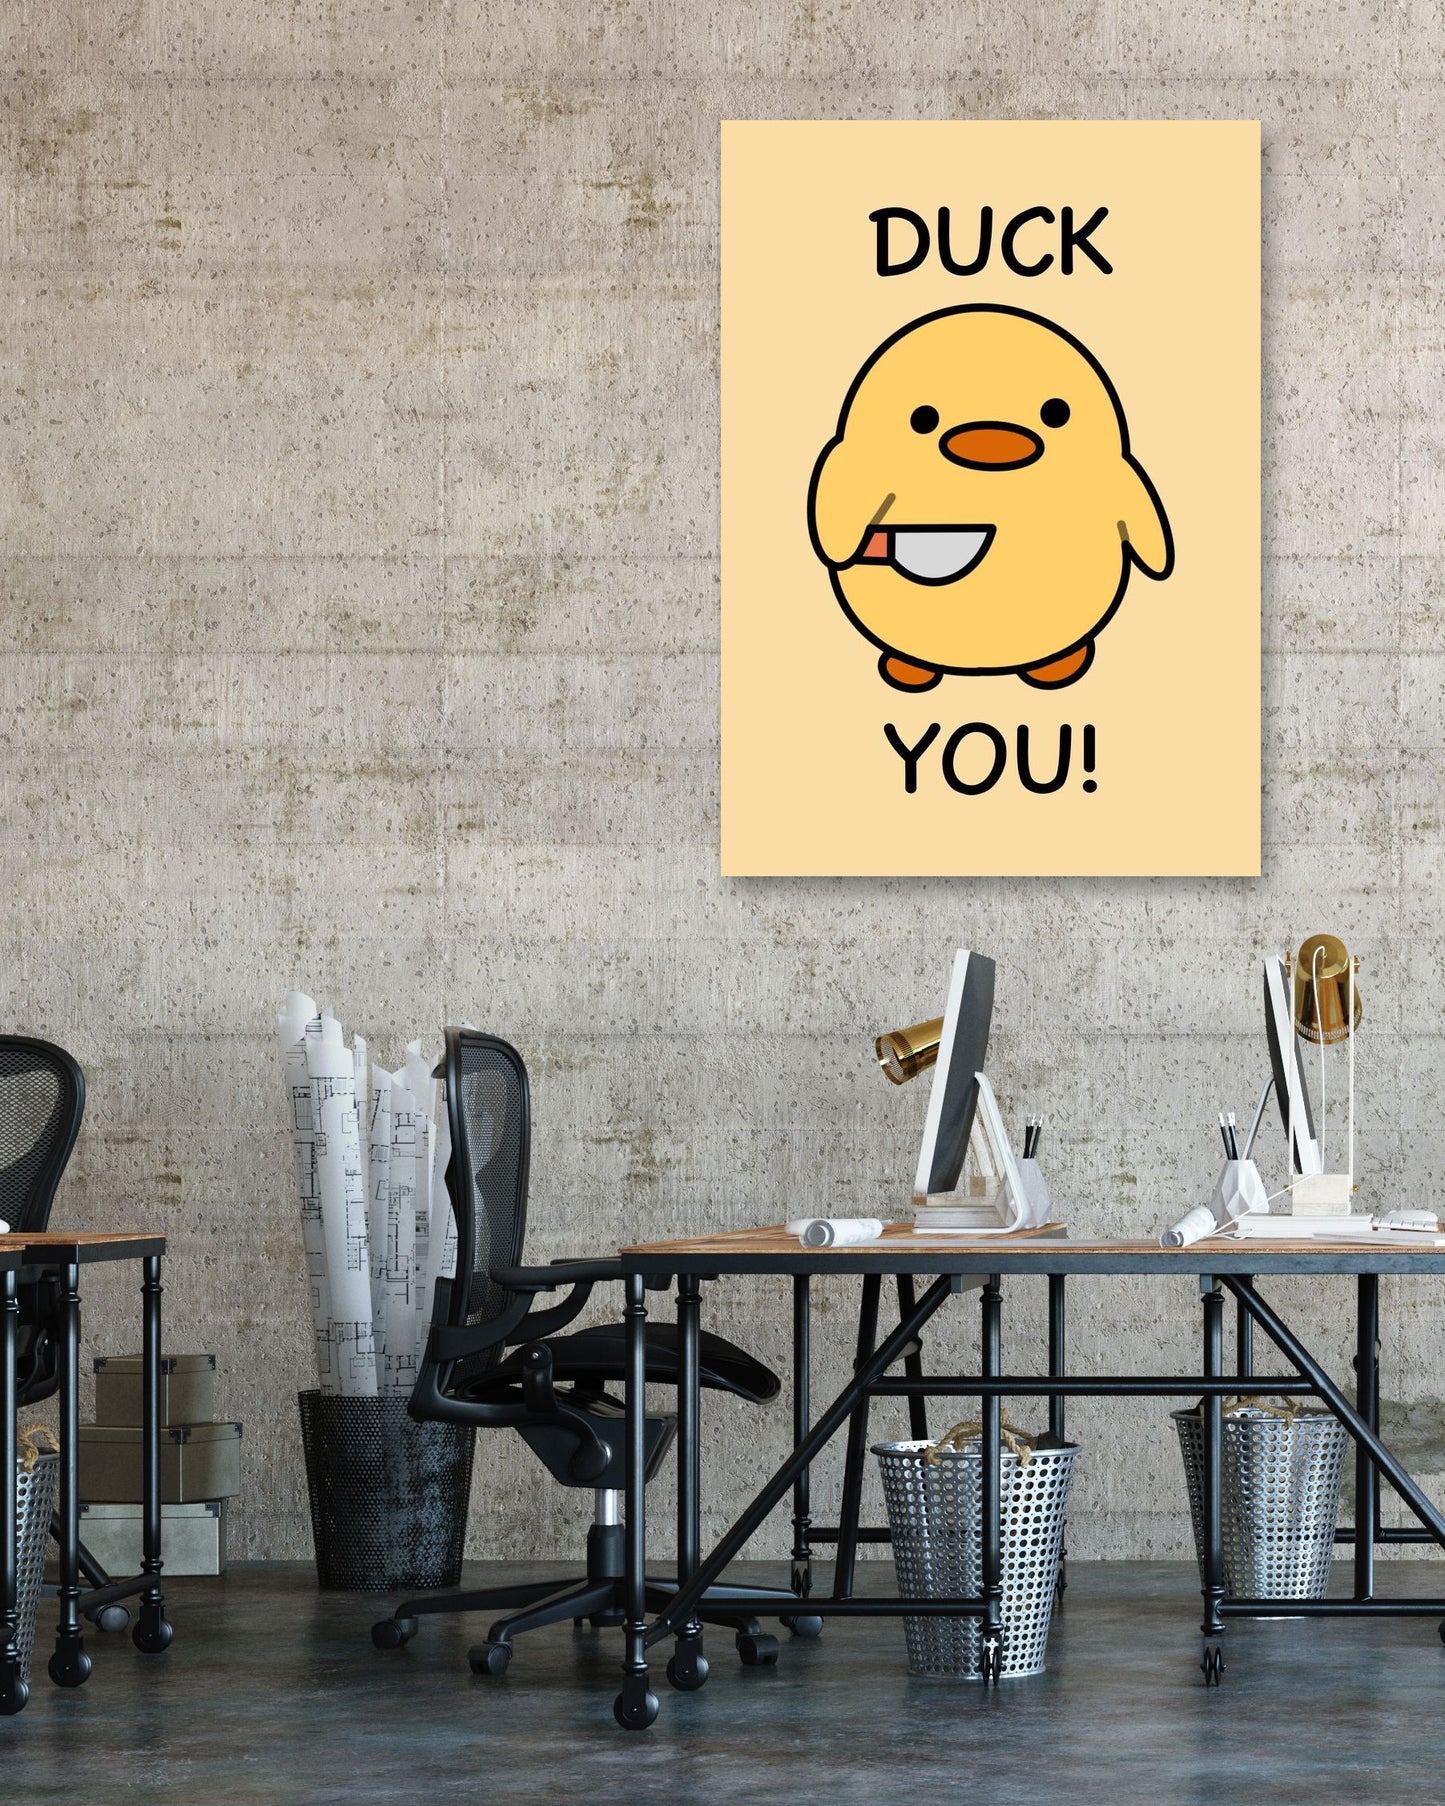 Duck You - @nueman